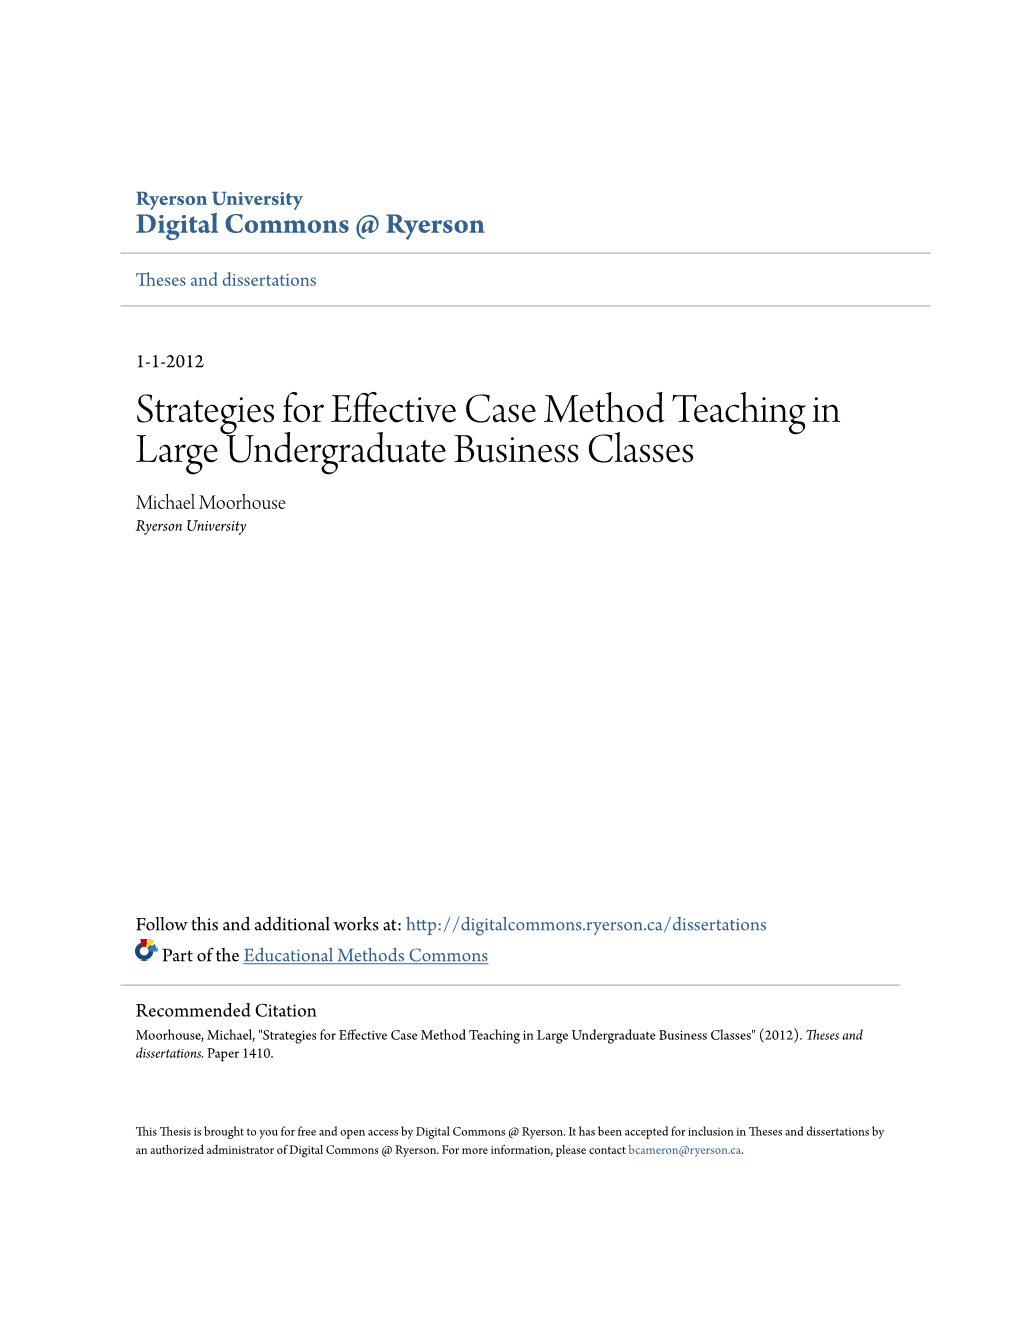 Strategies for Effective Case Method Teaching in Large Undergraduate Business Classes Michael Moorhouse Ryerson University